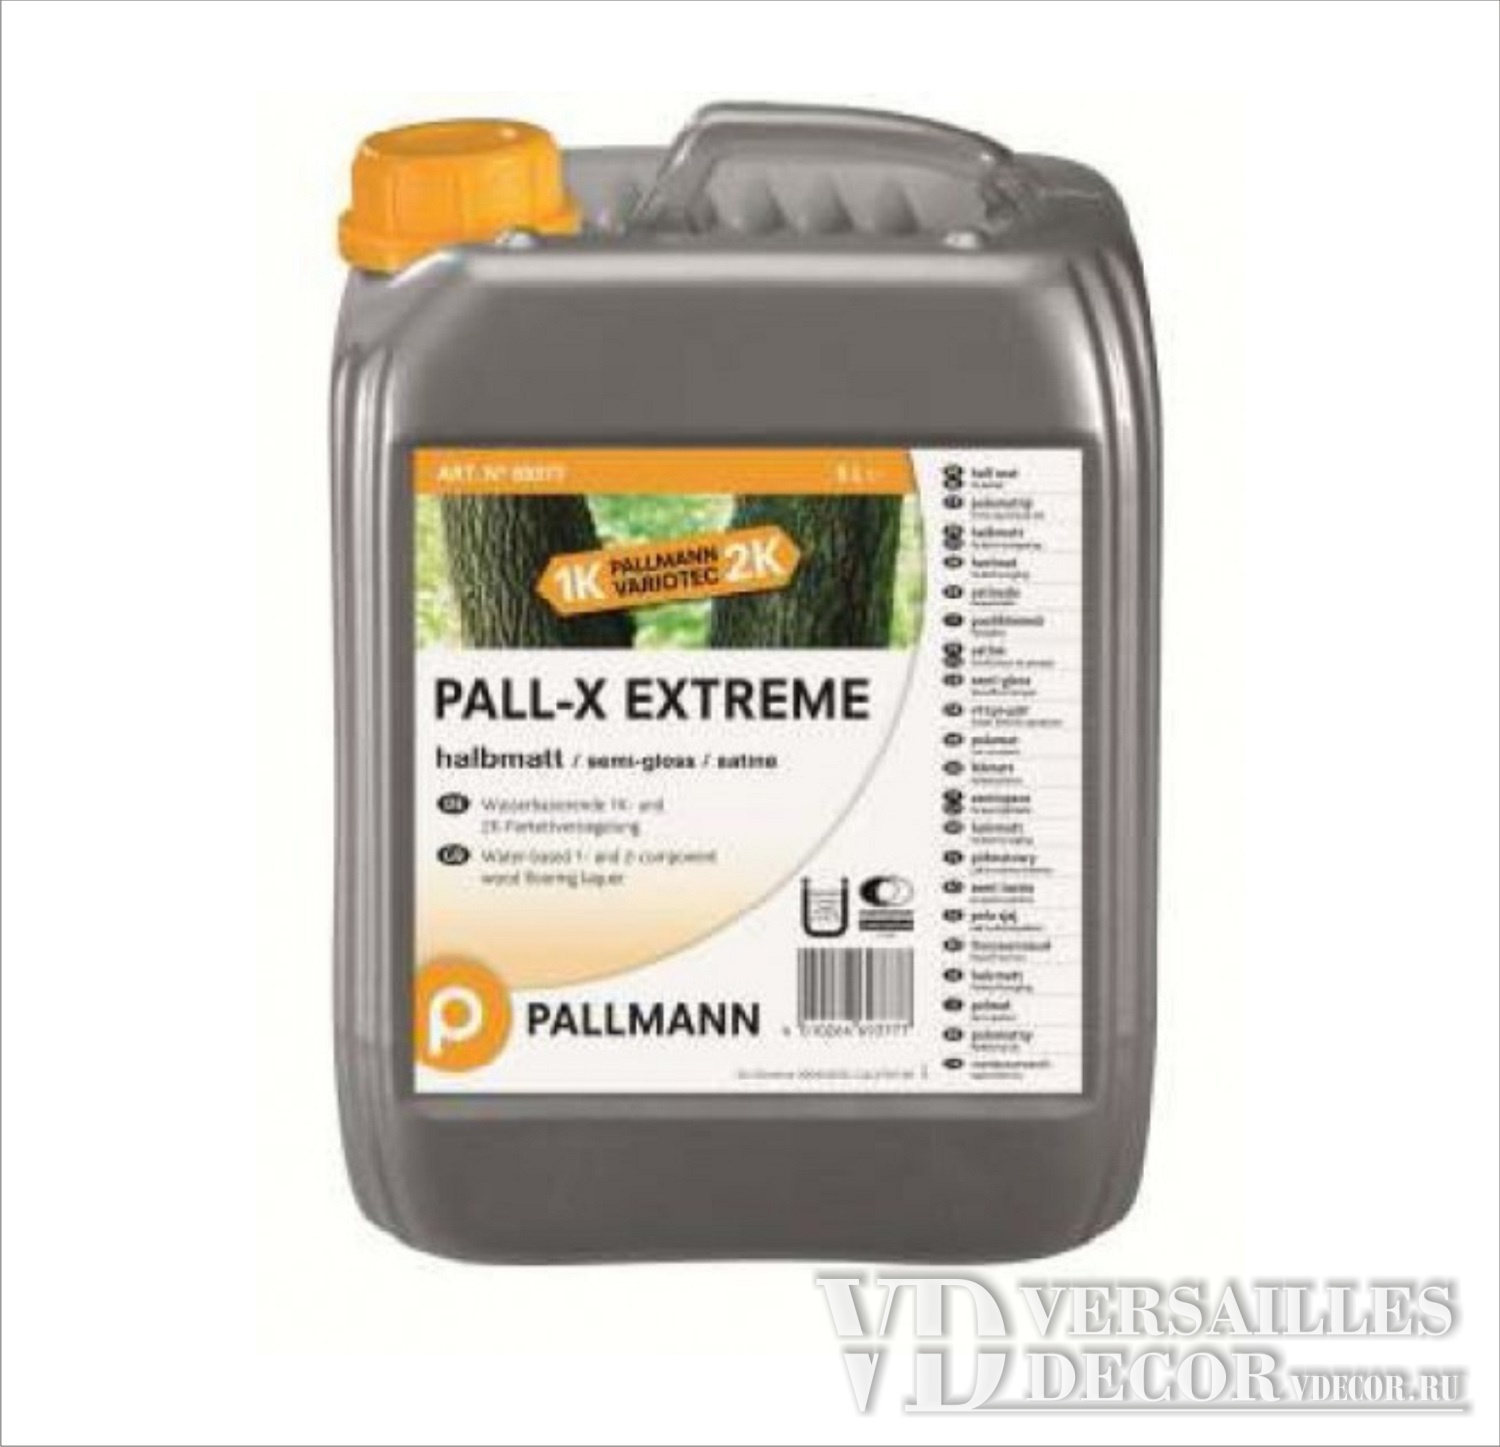 Pall-X Extreme